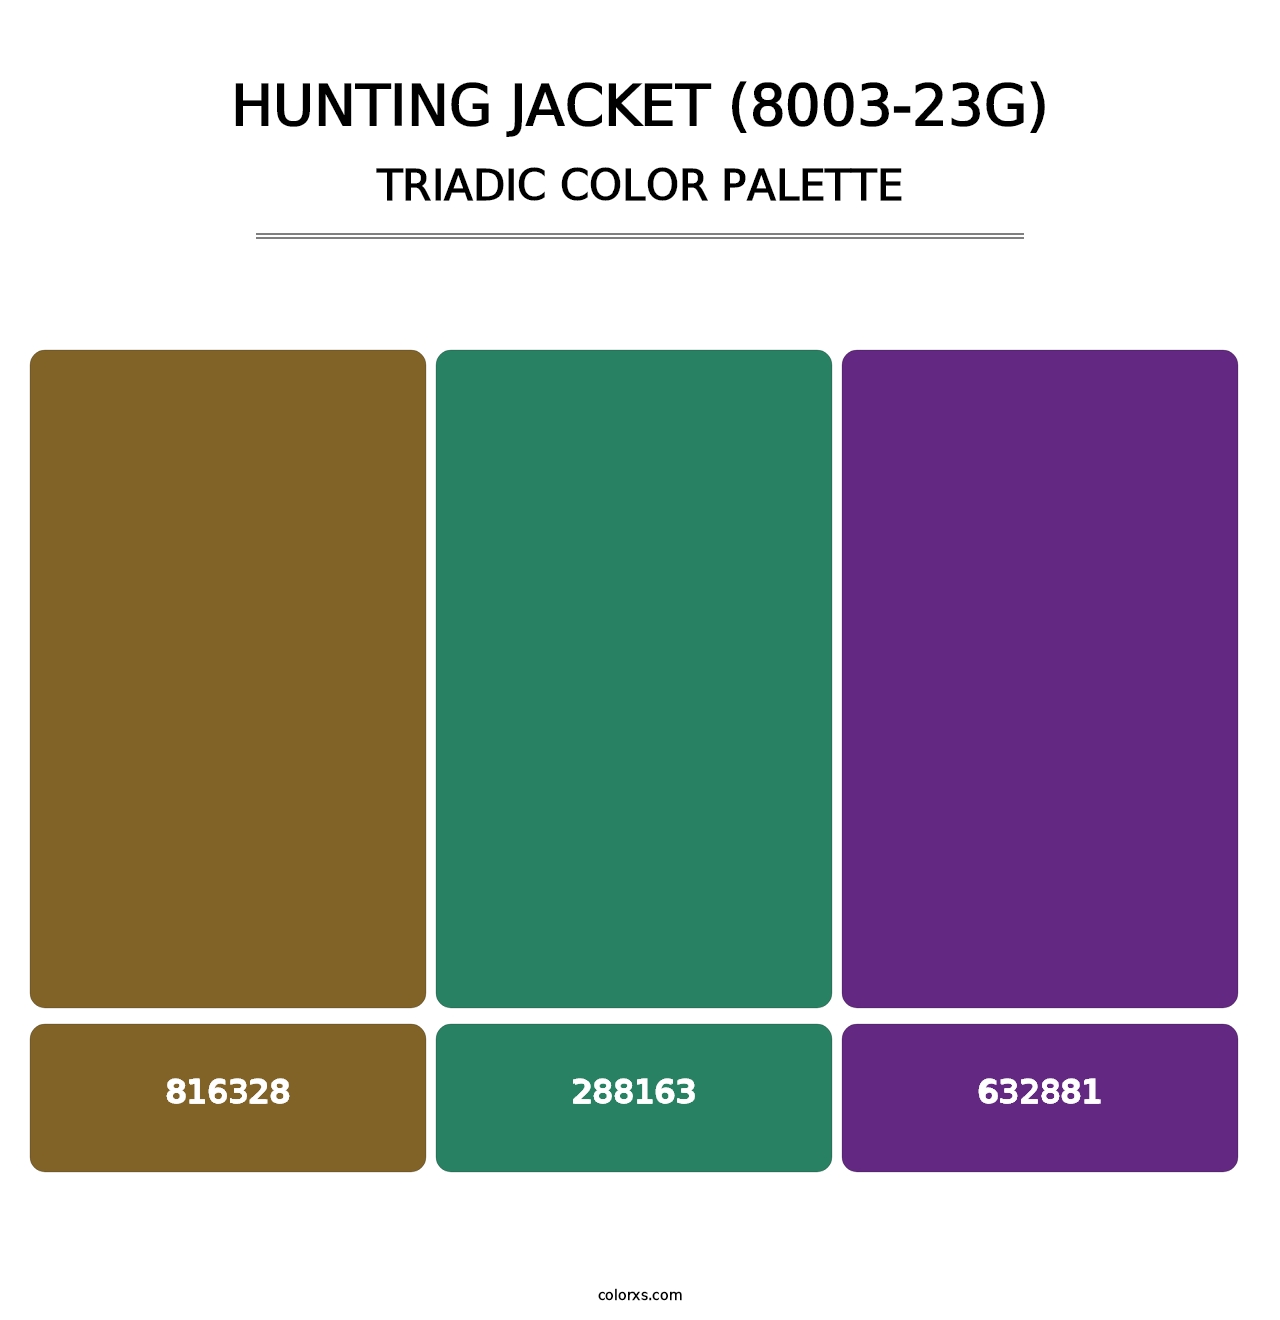 Hunting Jacket (8003-23G) - Triadic Color Palette